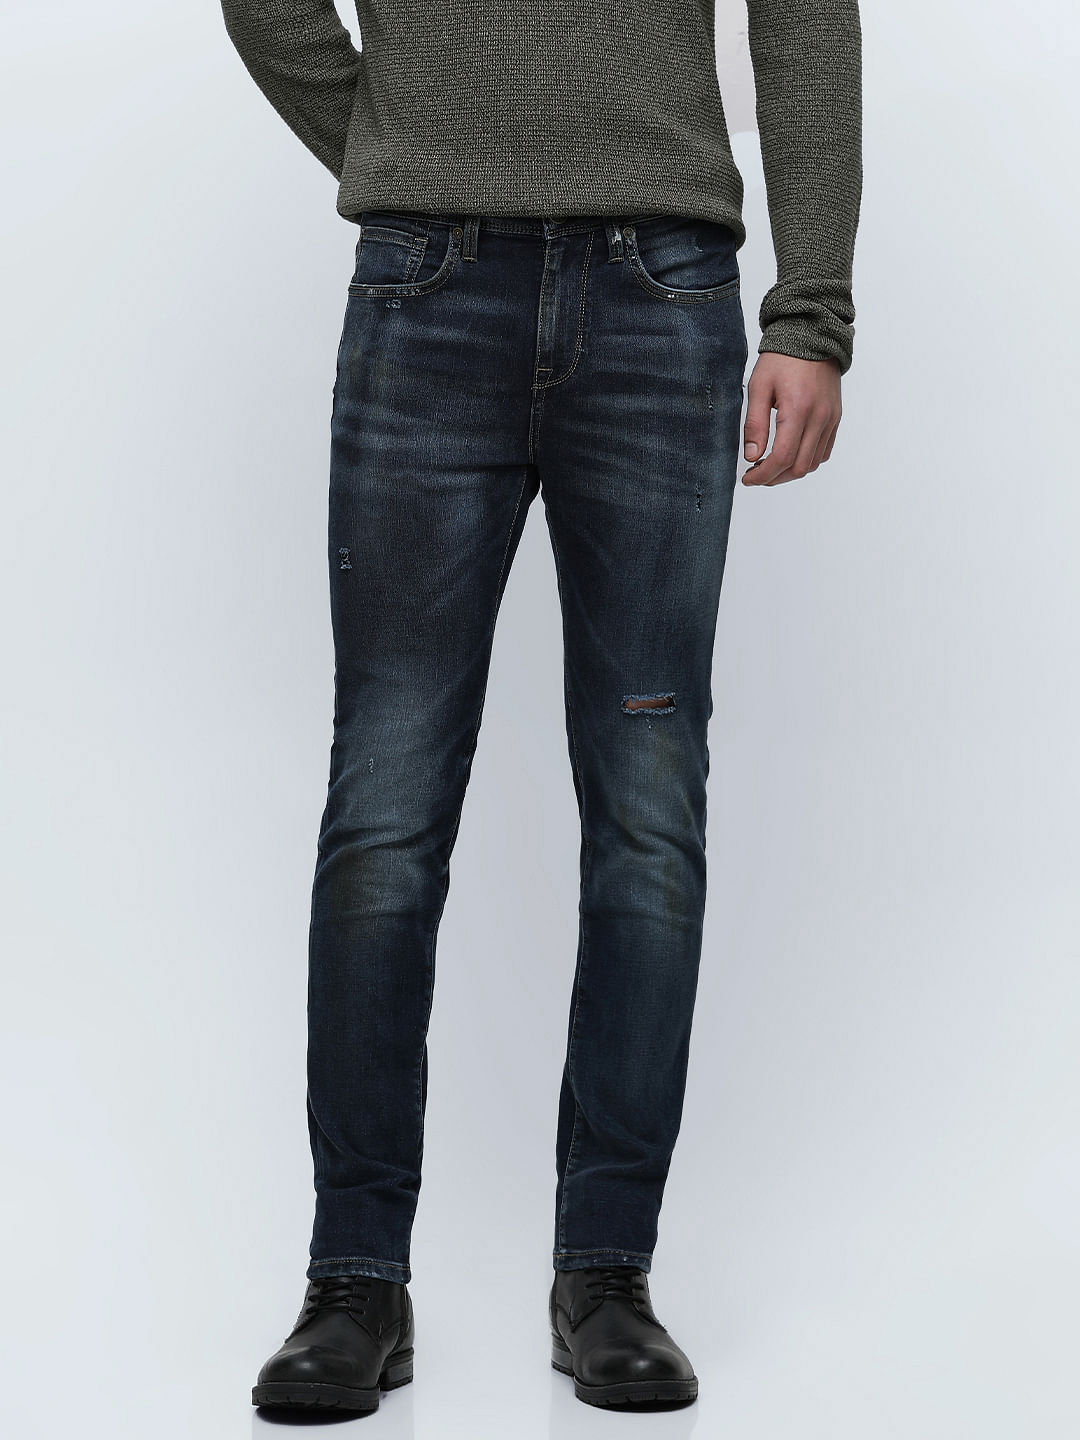 Men Stylish Designer Jeans